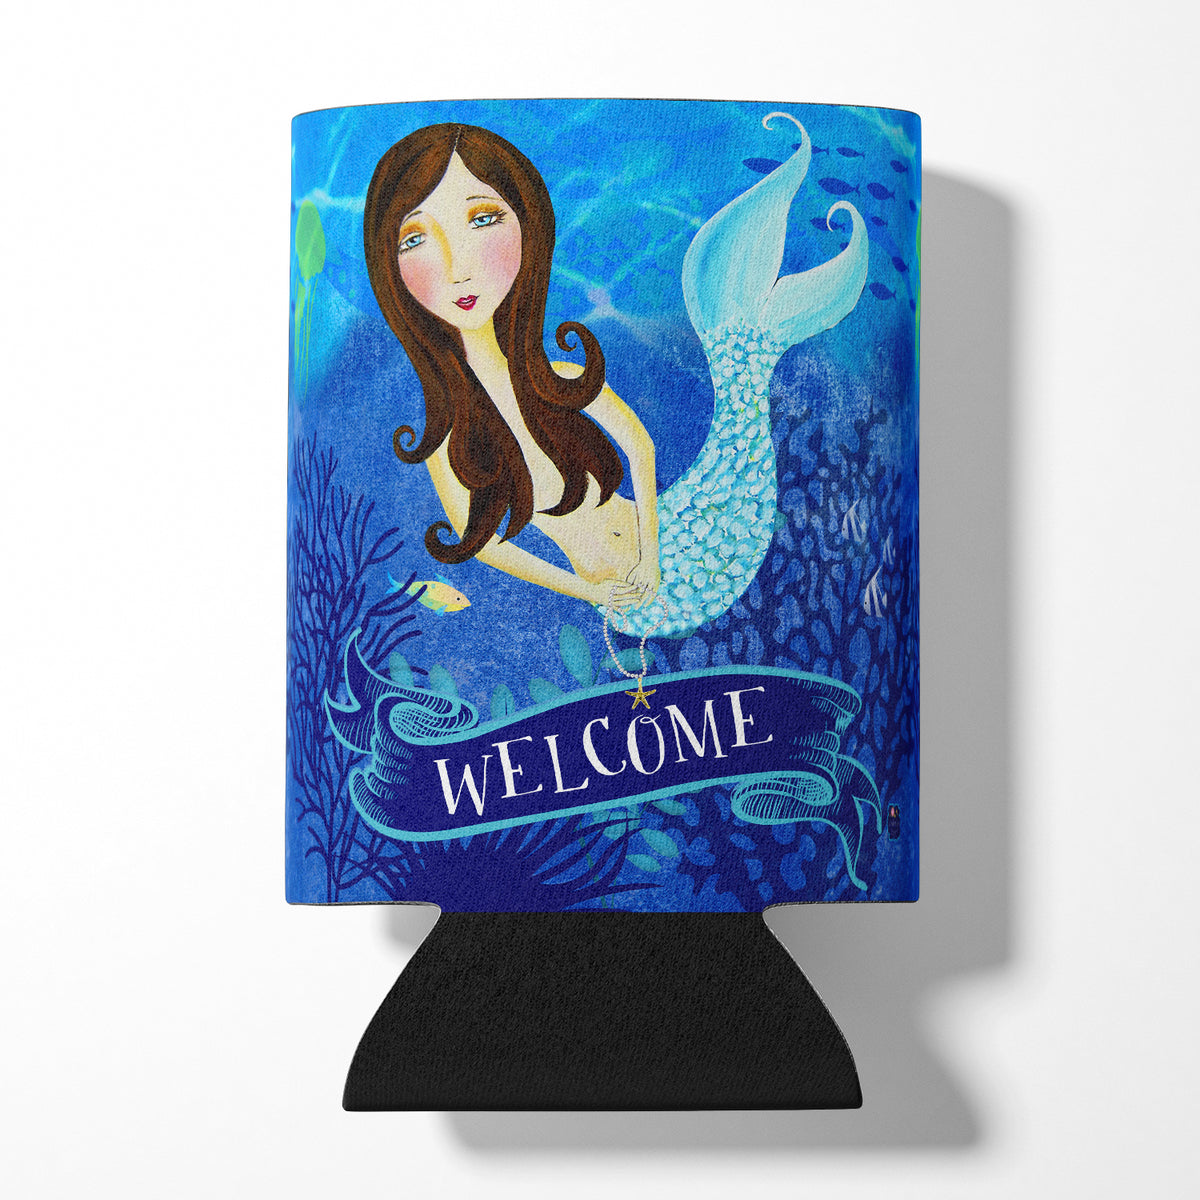 Welcome Mermaid Can or Bottle Hugger VHA3010CC